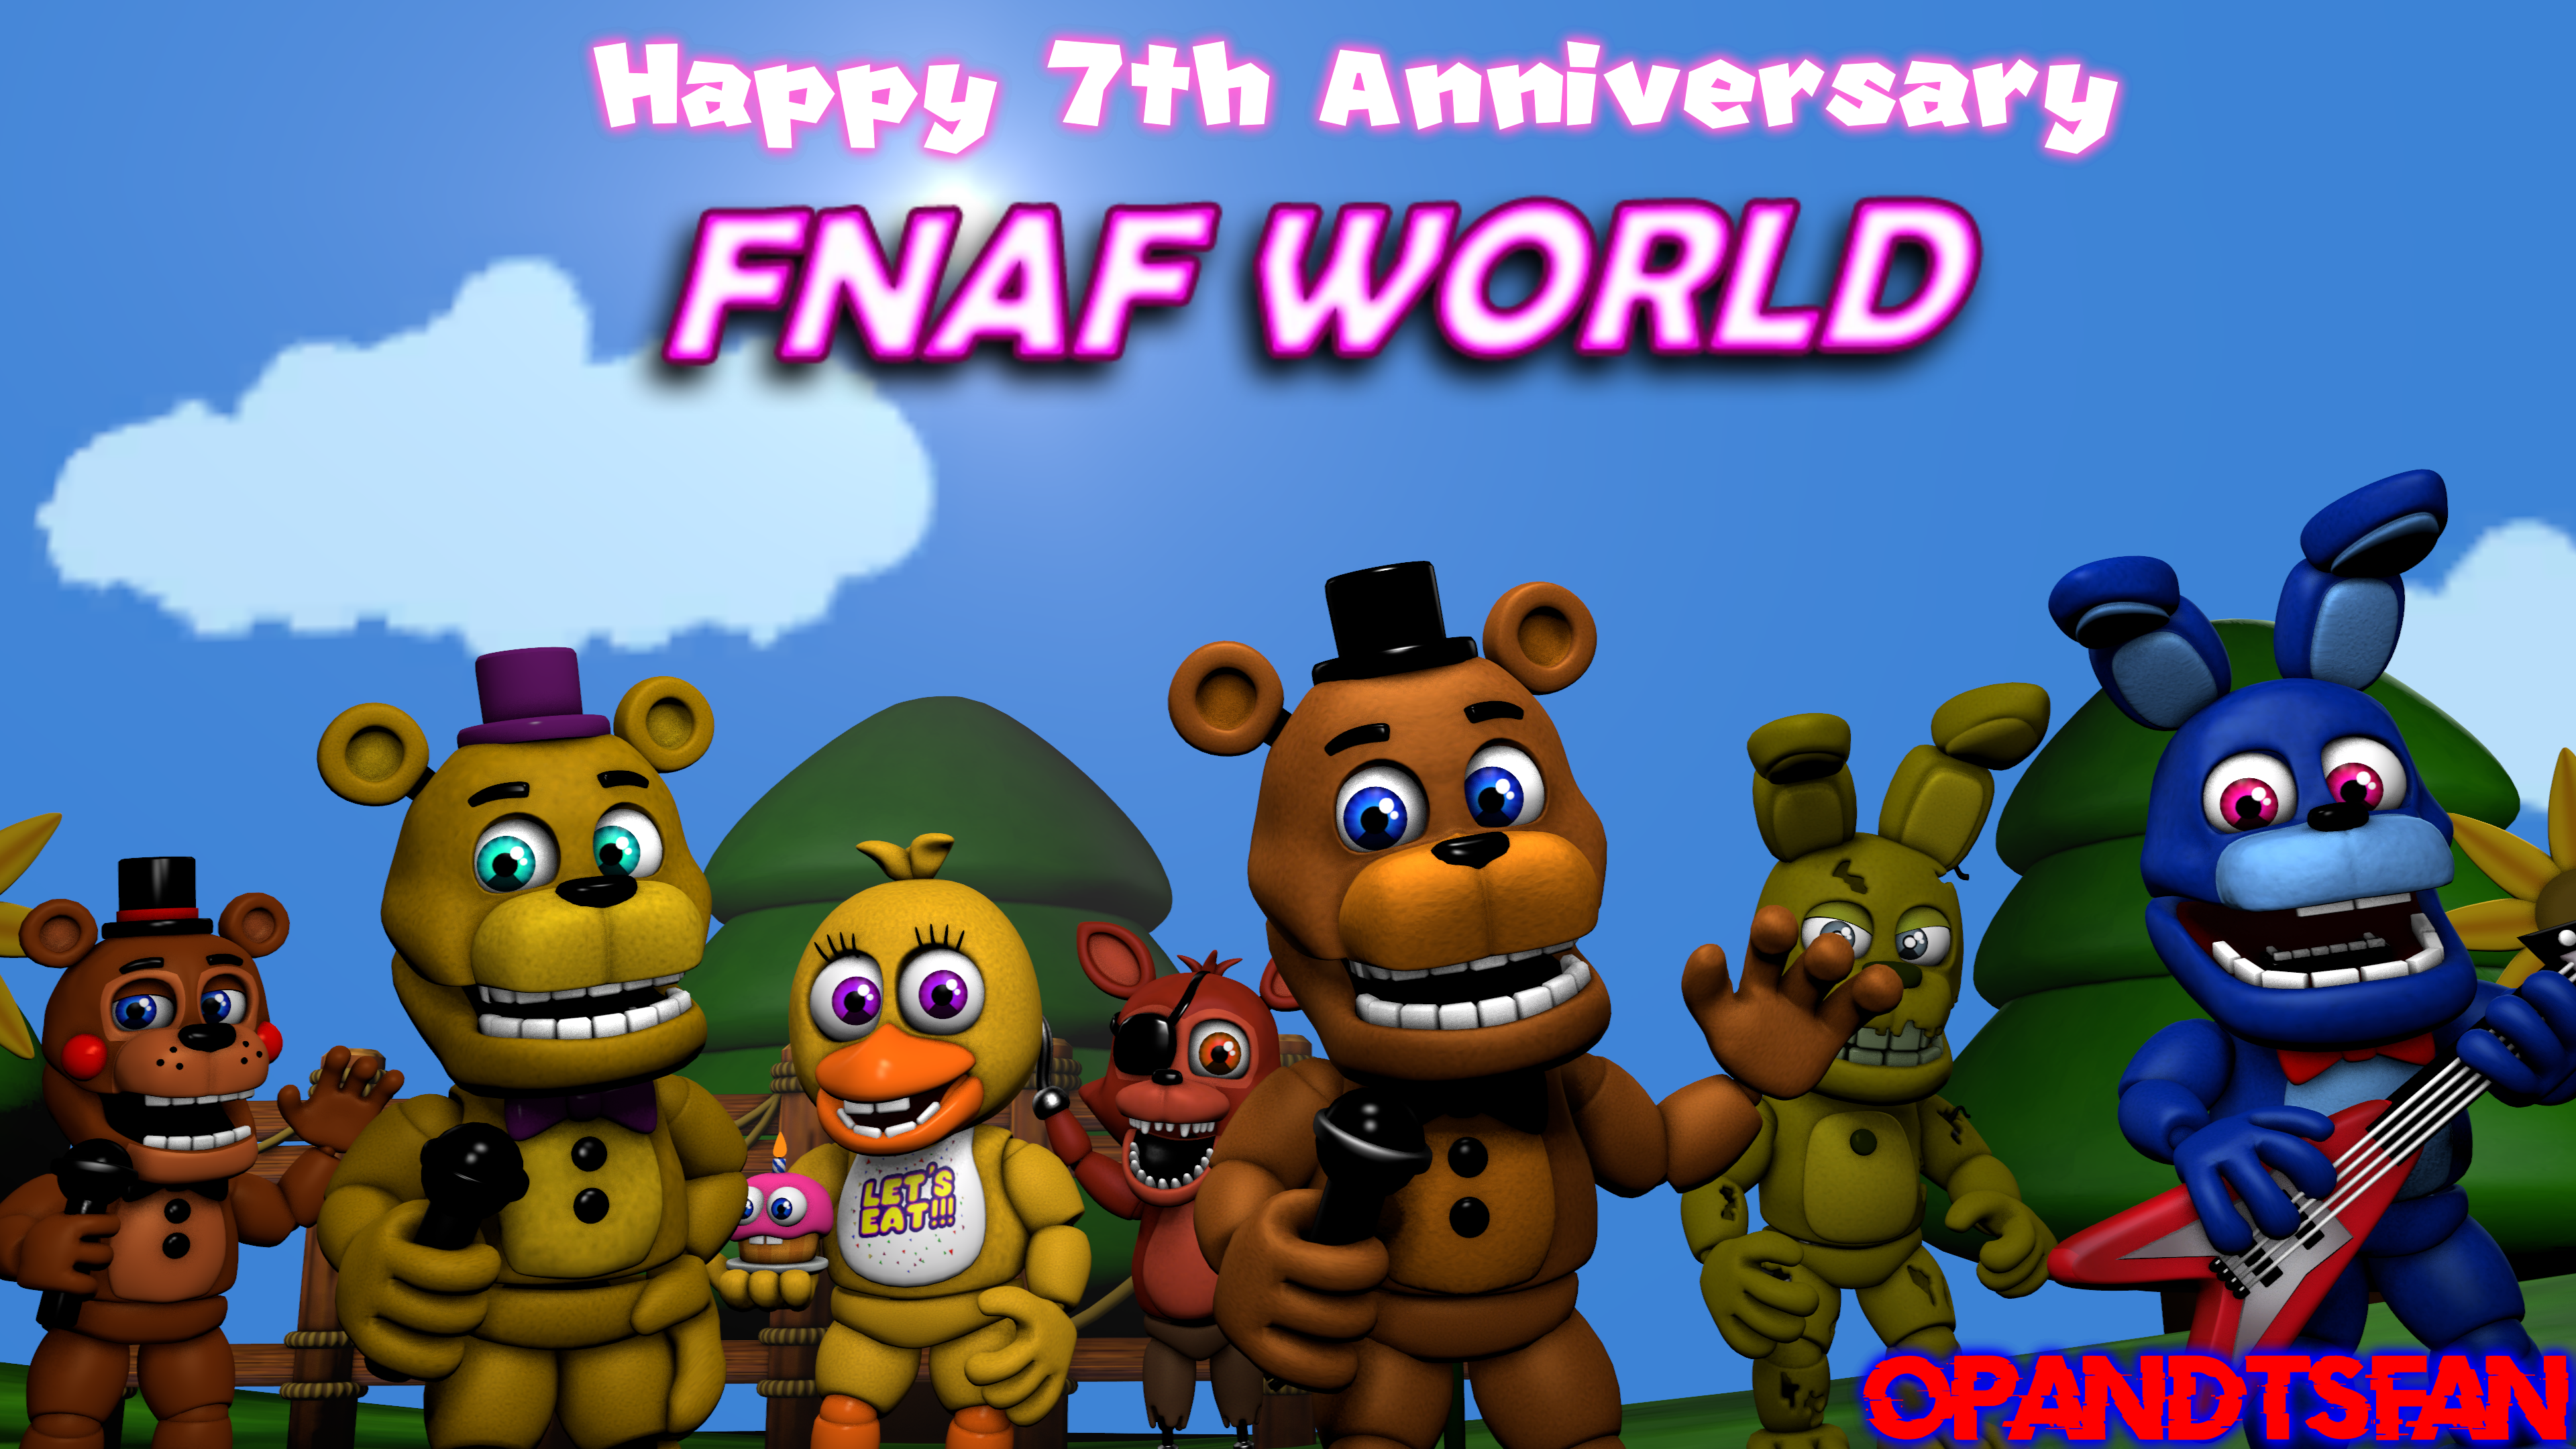 FNaF World 5th Anniversary by FuntimeFreddoFazbear on DeviantArt